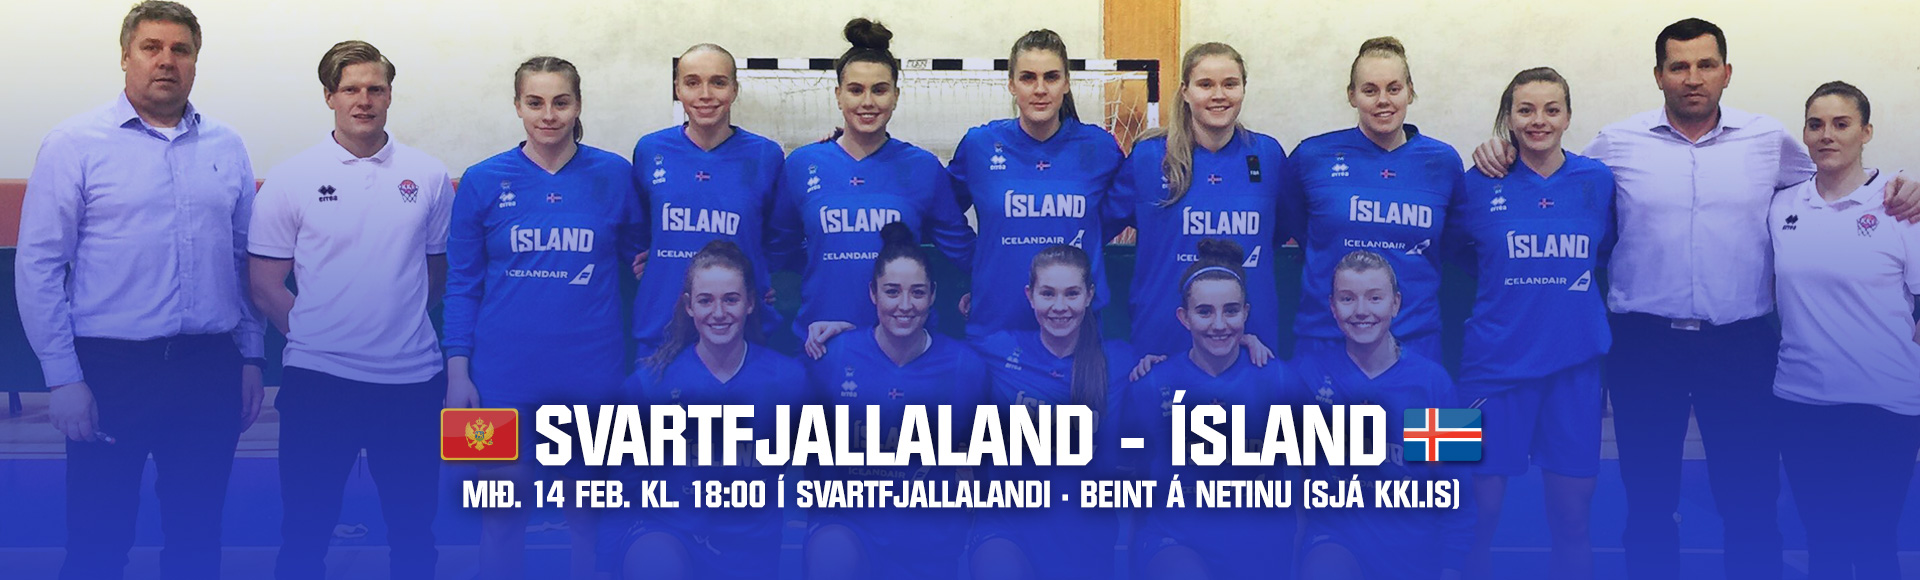 Undankeppni EM kvenna 2019: Svartfjallaland-Ísland